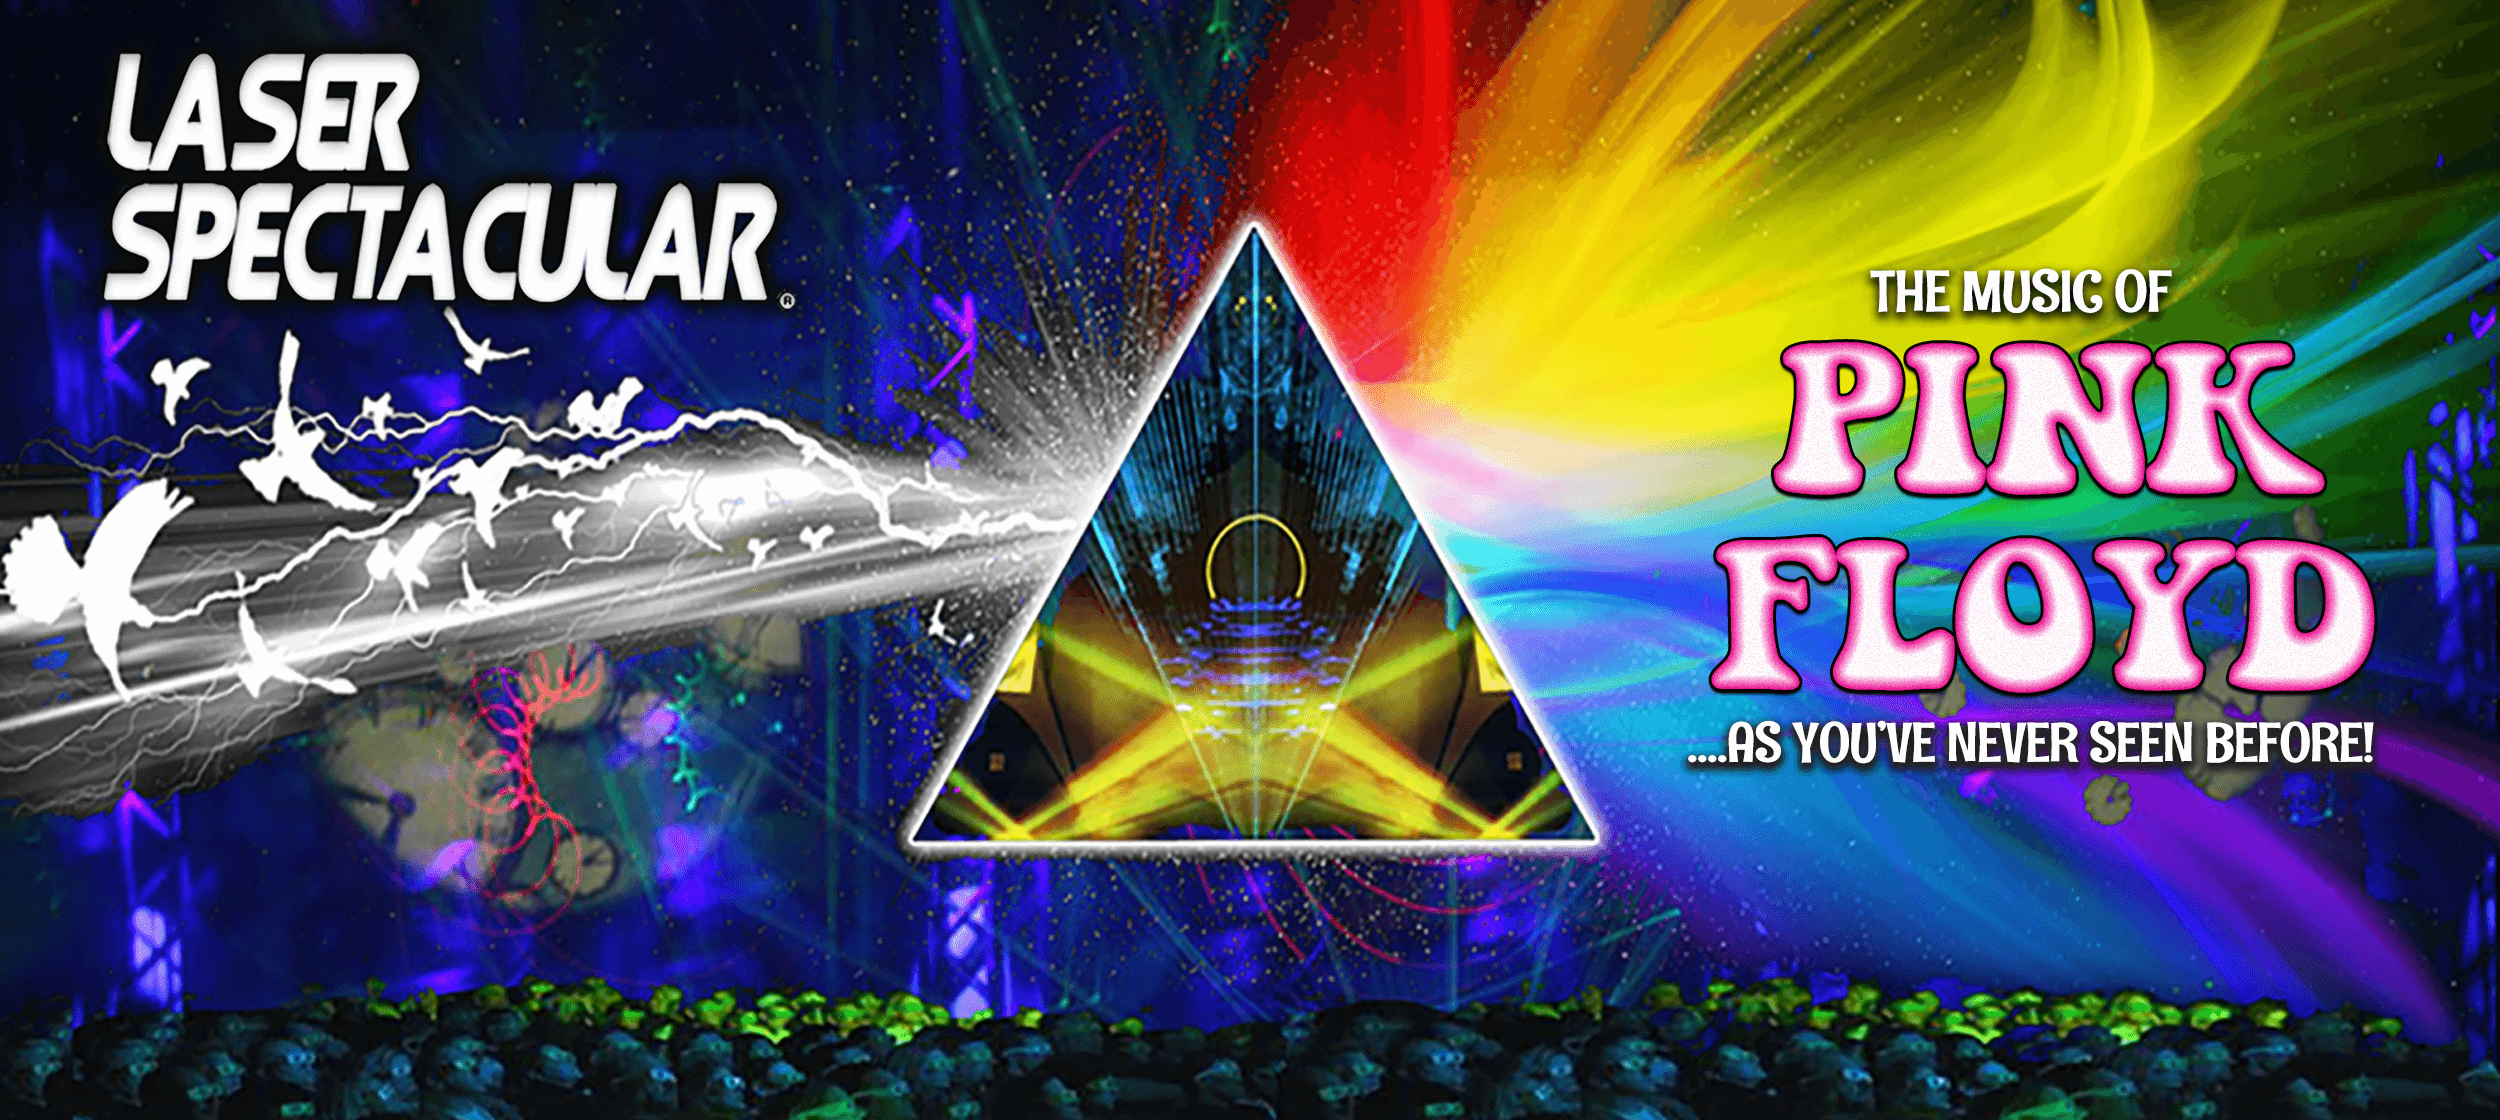 The Pink Floyd Laser Spectacular!